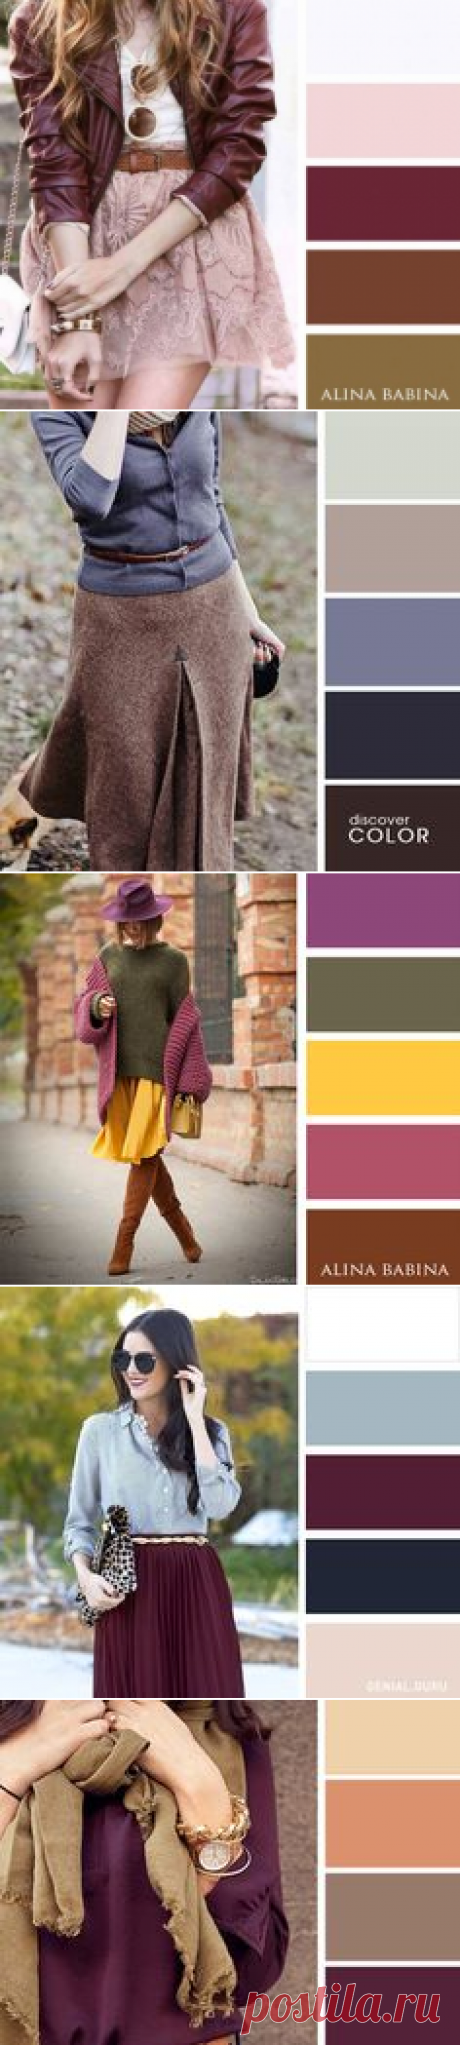 (5) que me pongo, ropa, colores, moda, outfit, como combinar la ropa, asesora de imagen, como me veo, personal shopper | Paletas de colores